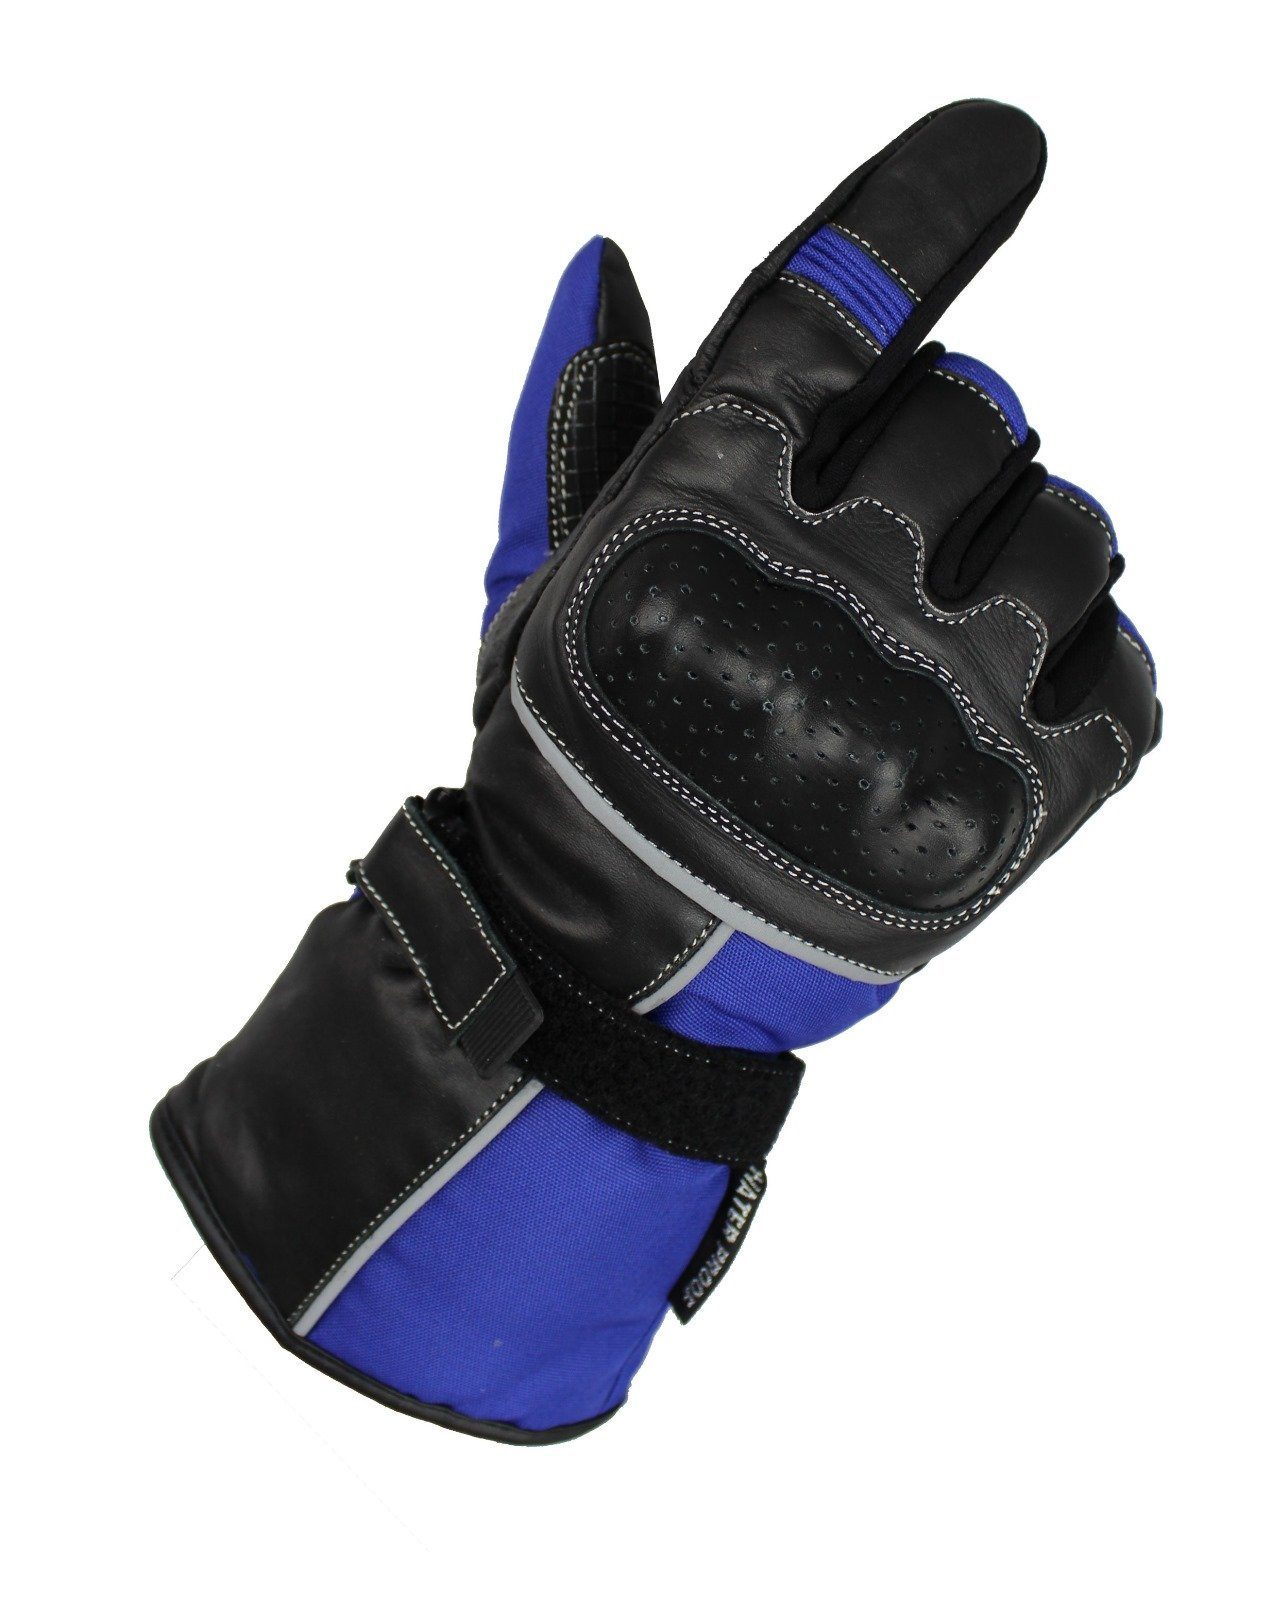 Motorradhandschuhe Atmungsaktiv Speeds Handschuhe Handschuhe für Funktion) Winter + Winddicht Custom Racing (Touchscreen Wasserdicht Reflektierende Blau Material + + Biker Alpha